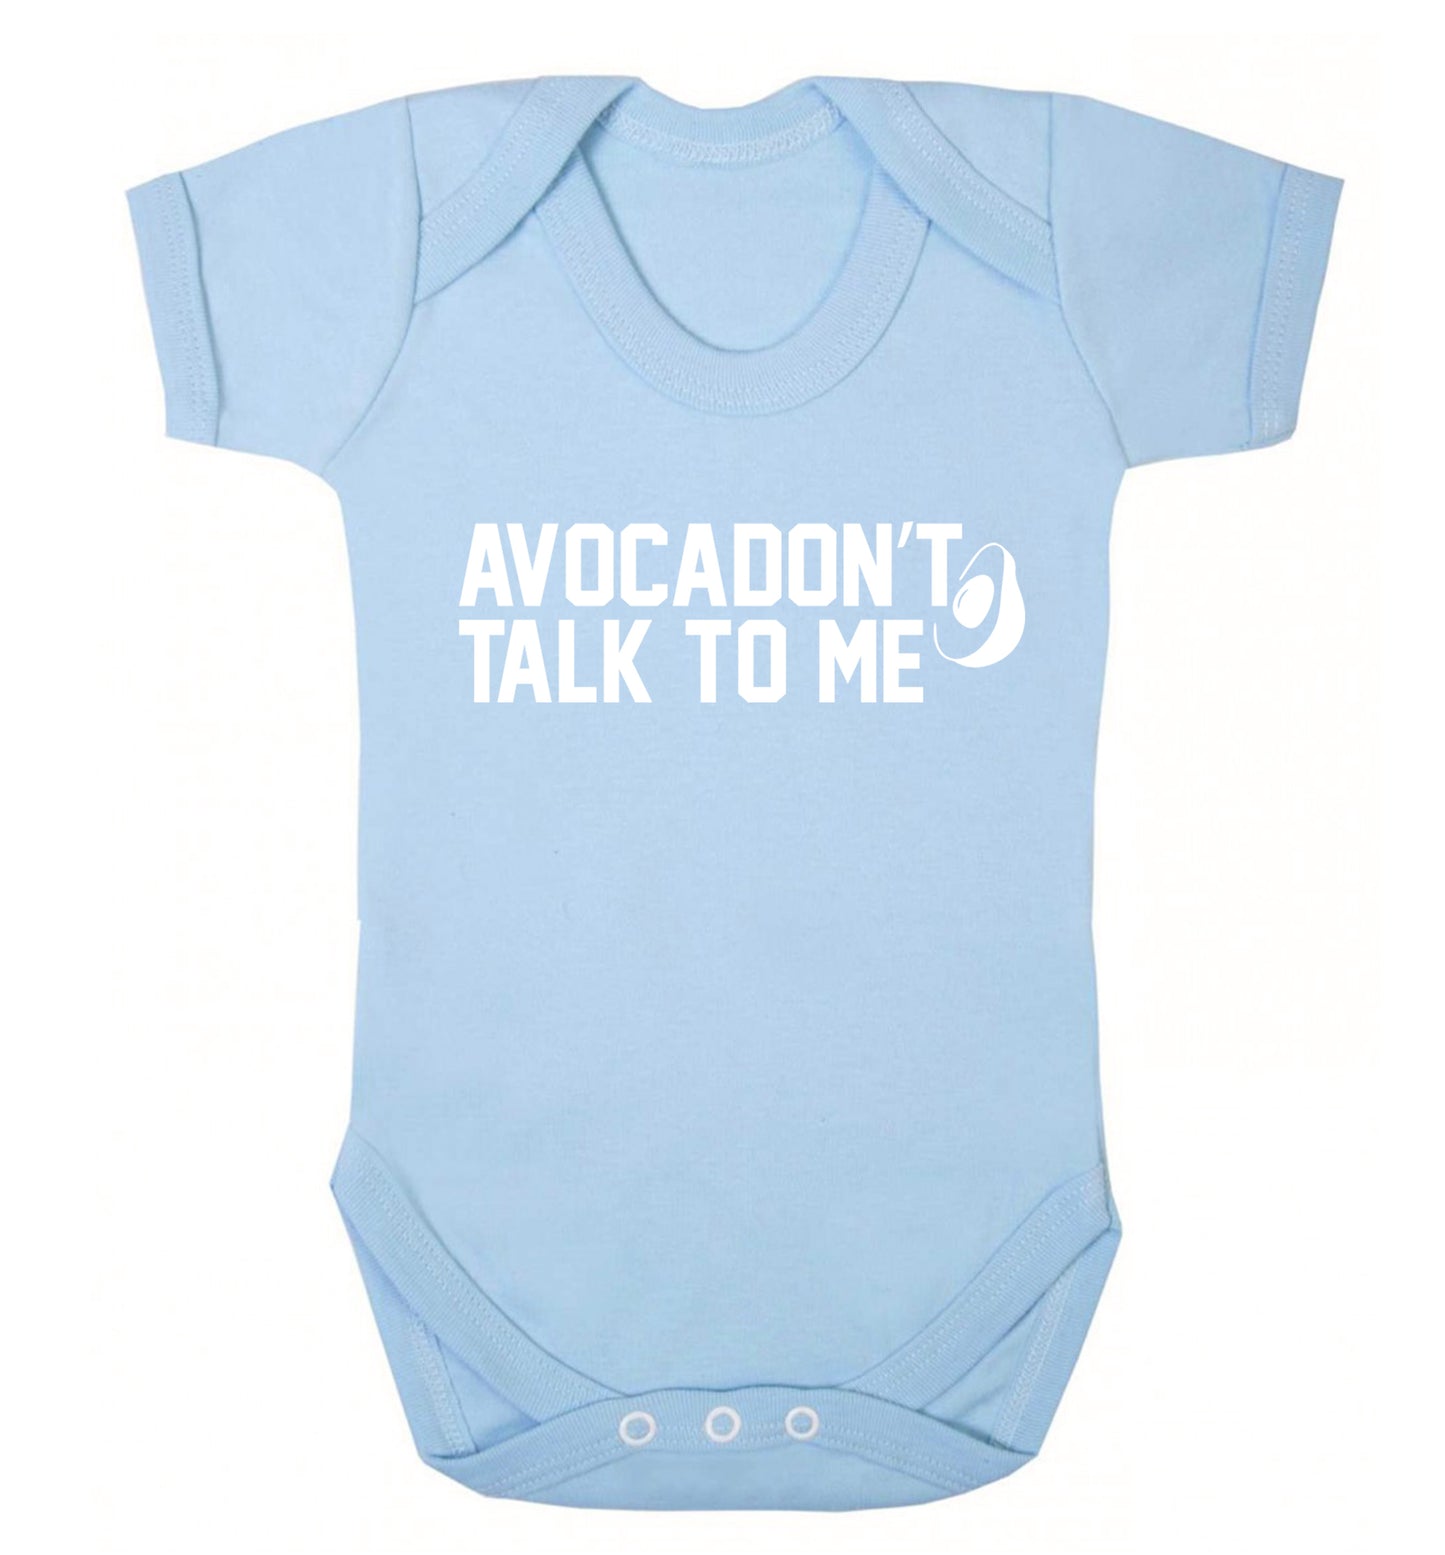 Avocadon't talk to me Baby Vest pale blue 18-24 months